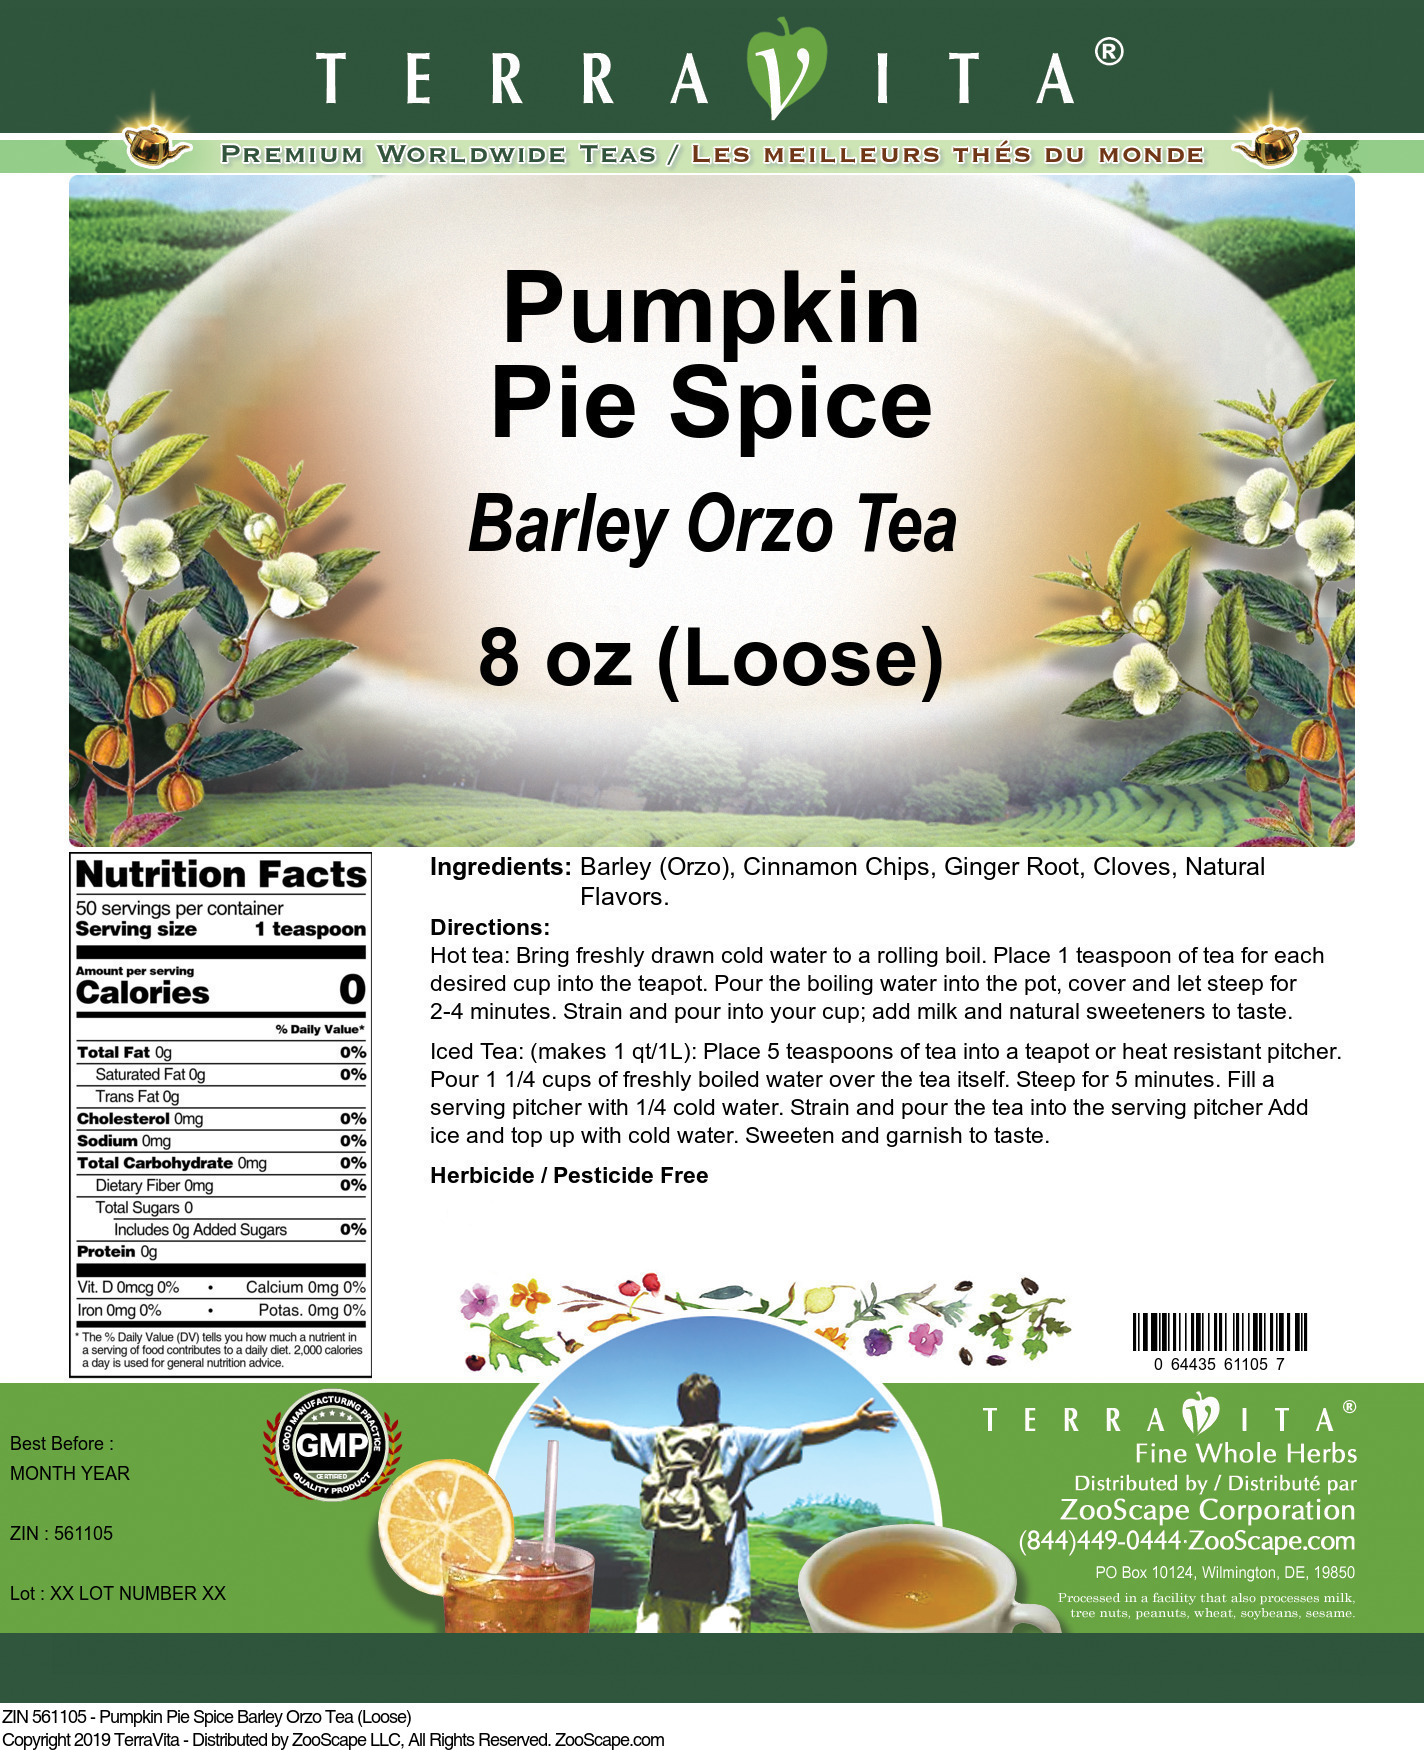 Pumpkin Pie Spice Barley Orzo Tea (Loose) - Label